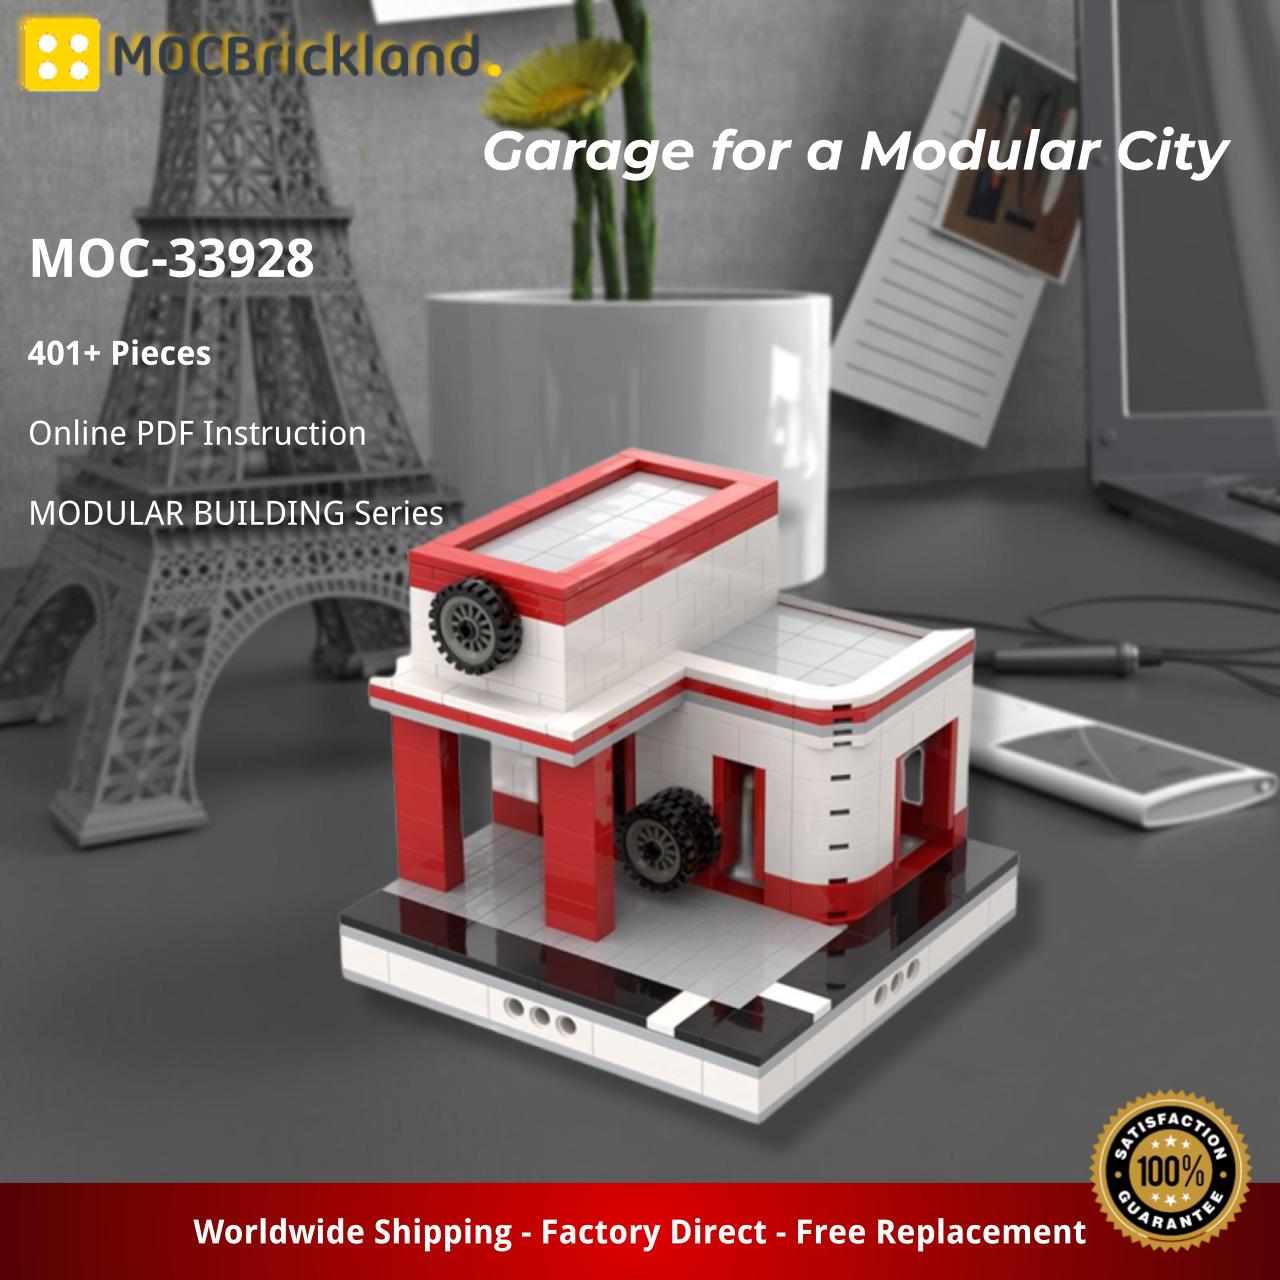 MOCBRICKLAND MOC-34566 Mirage Hotel for Modular City Las Vegas